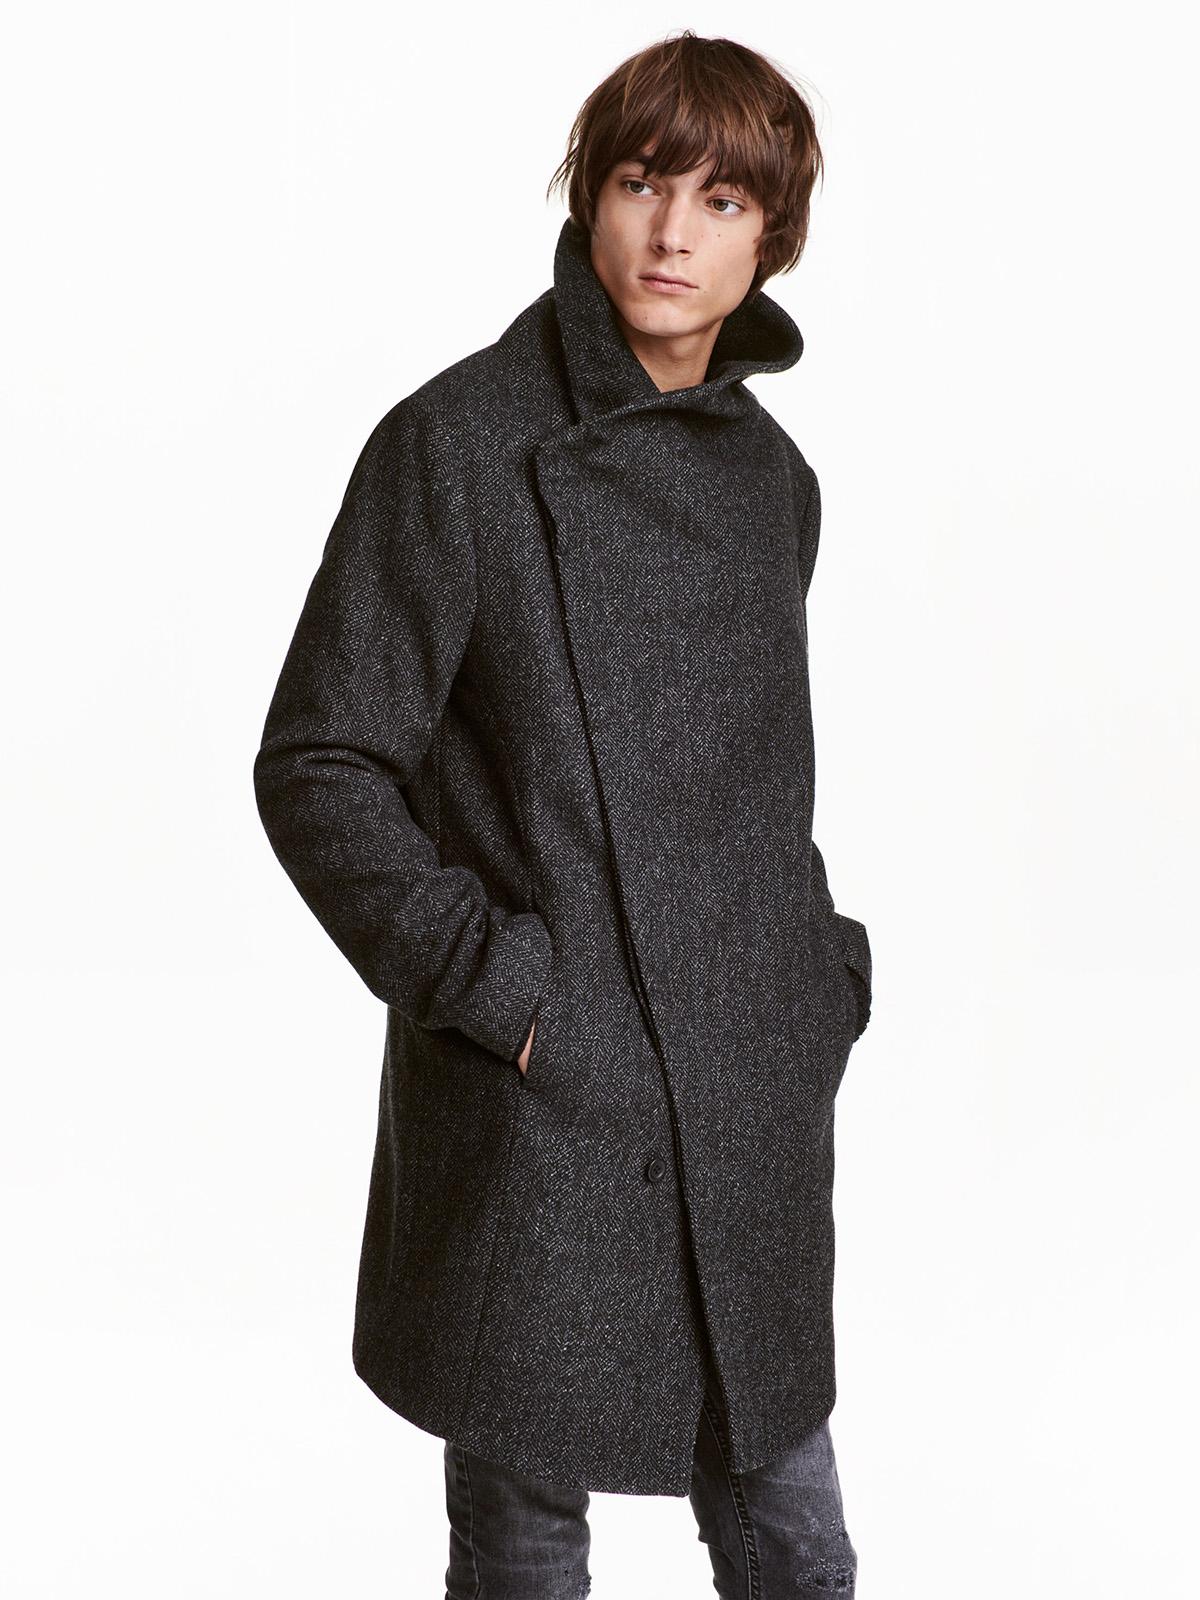 H m мужское купить. Wool Blend Coat пальто мужское\. Пальто мужское HM H. O/N 691410 H/M пальто мужское. Пальто HM мужское.